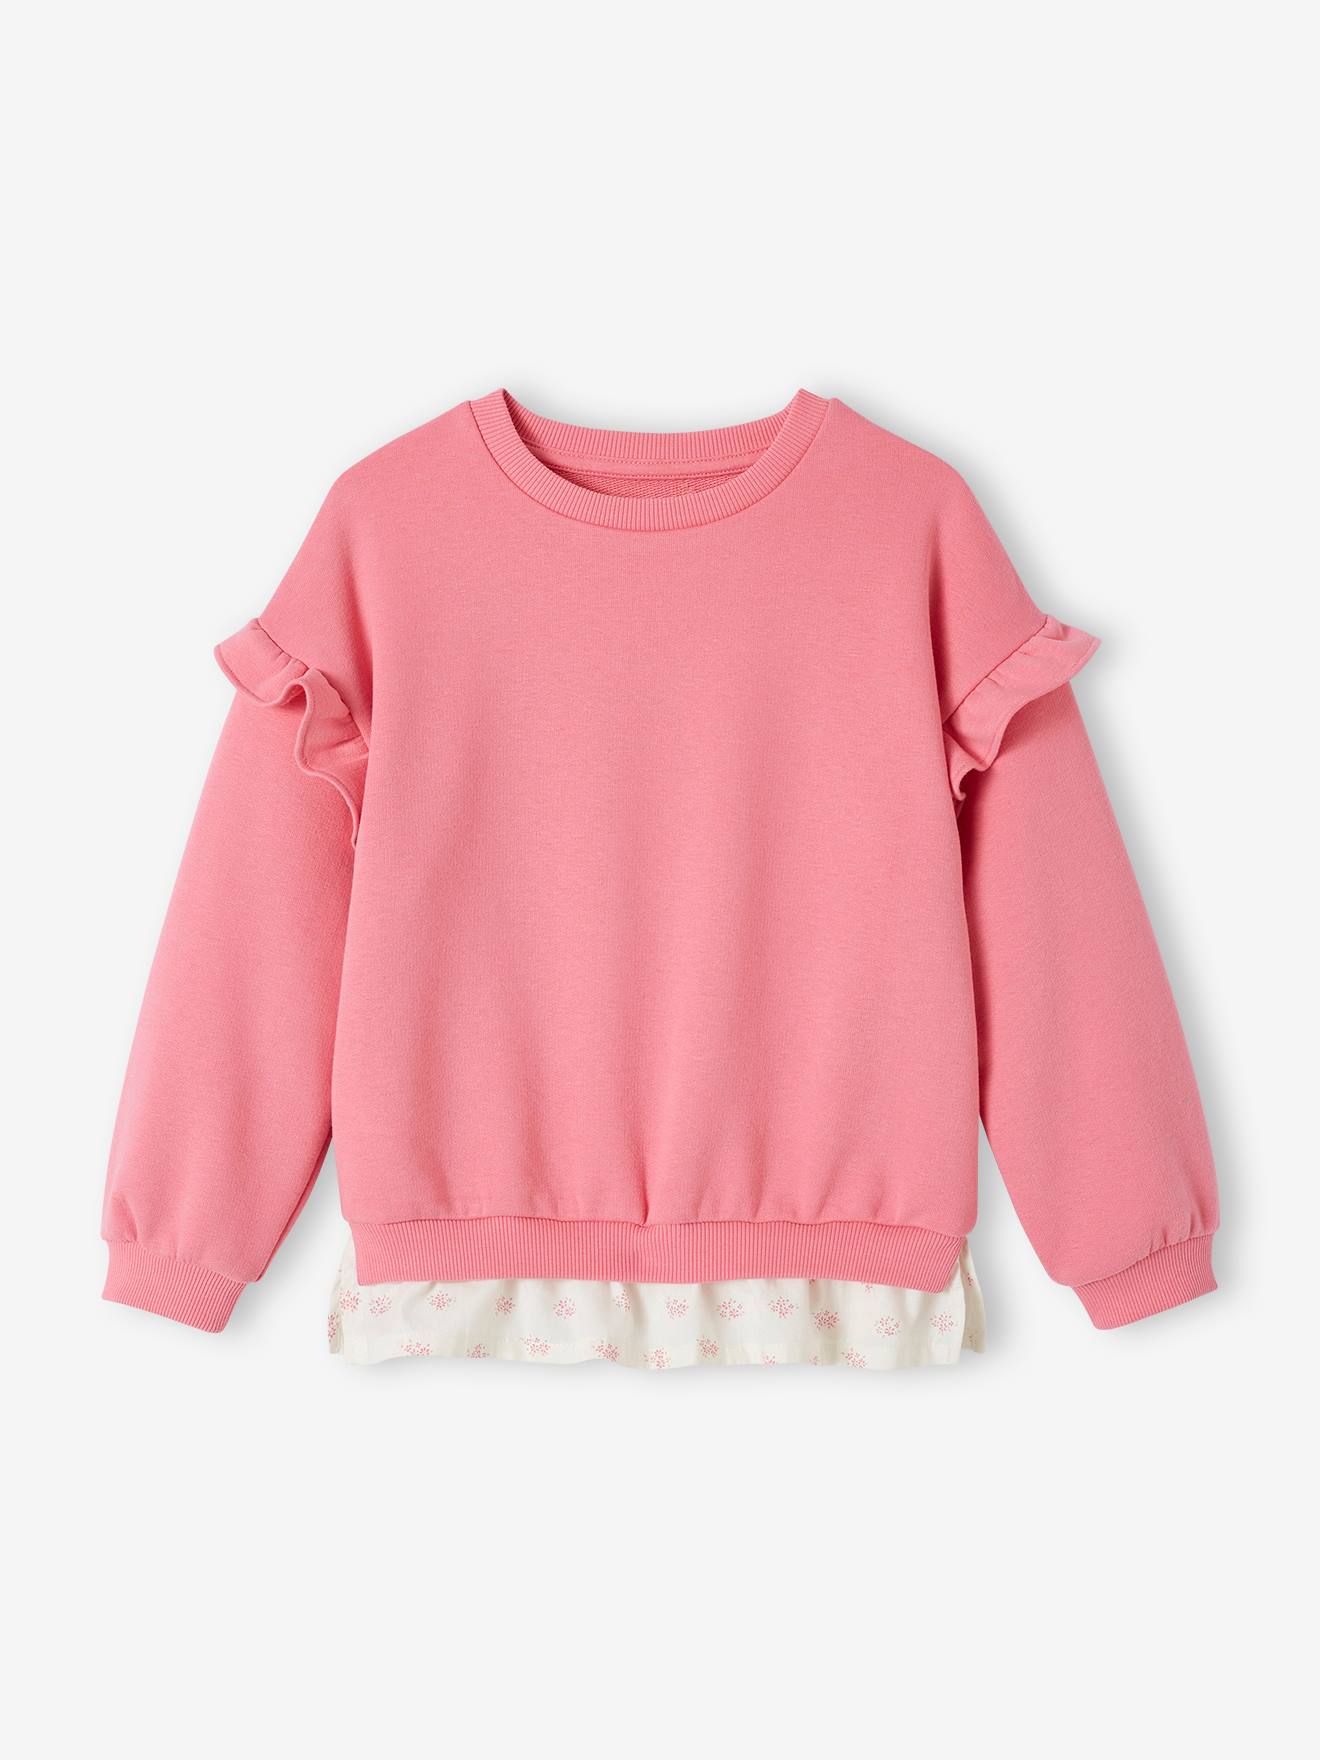 Dual Fabric Sweatshirt with Ruffles for Girls sweet pink